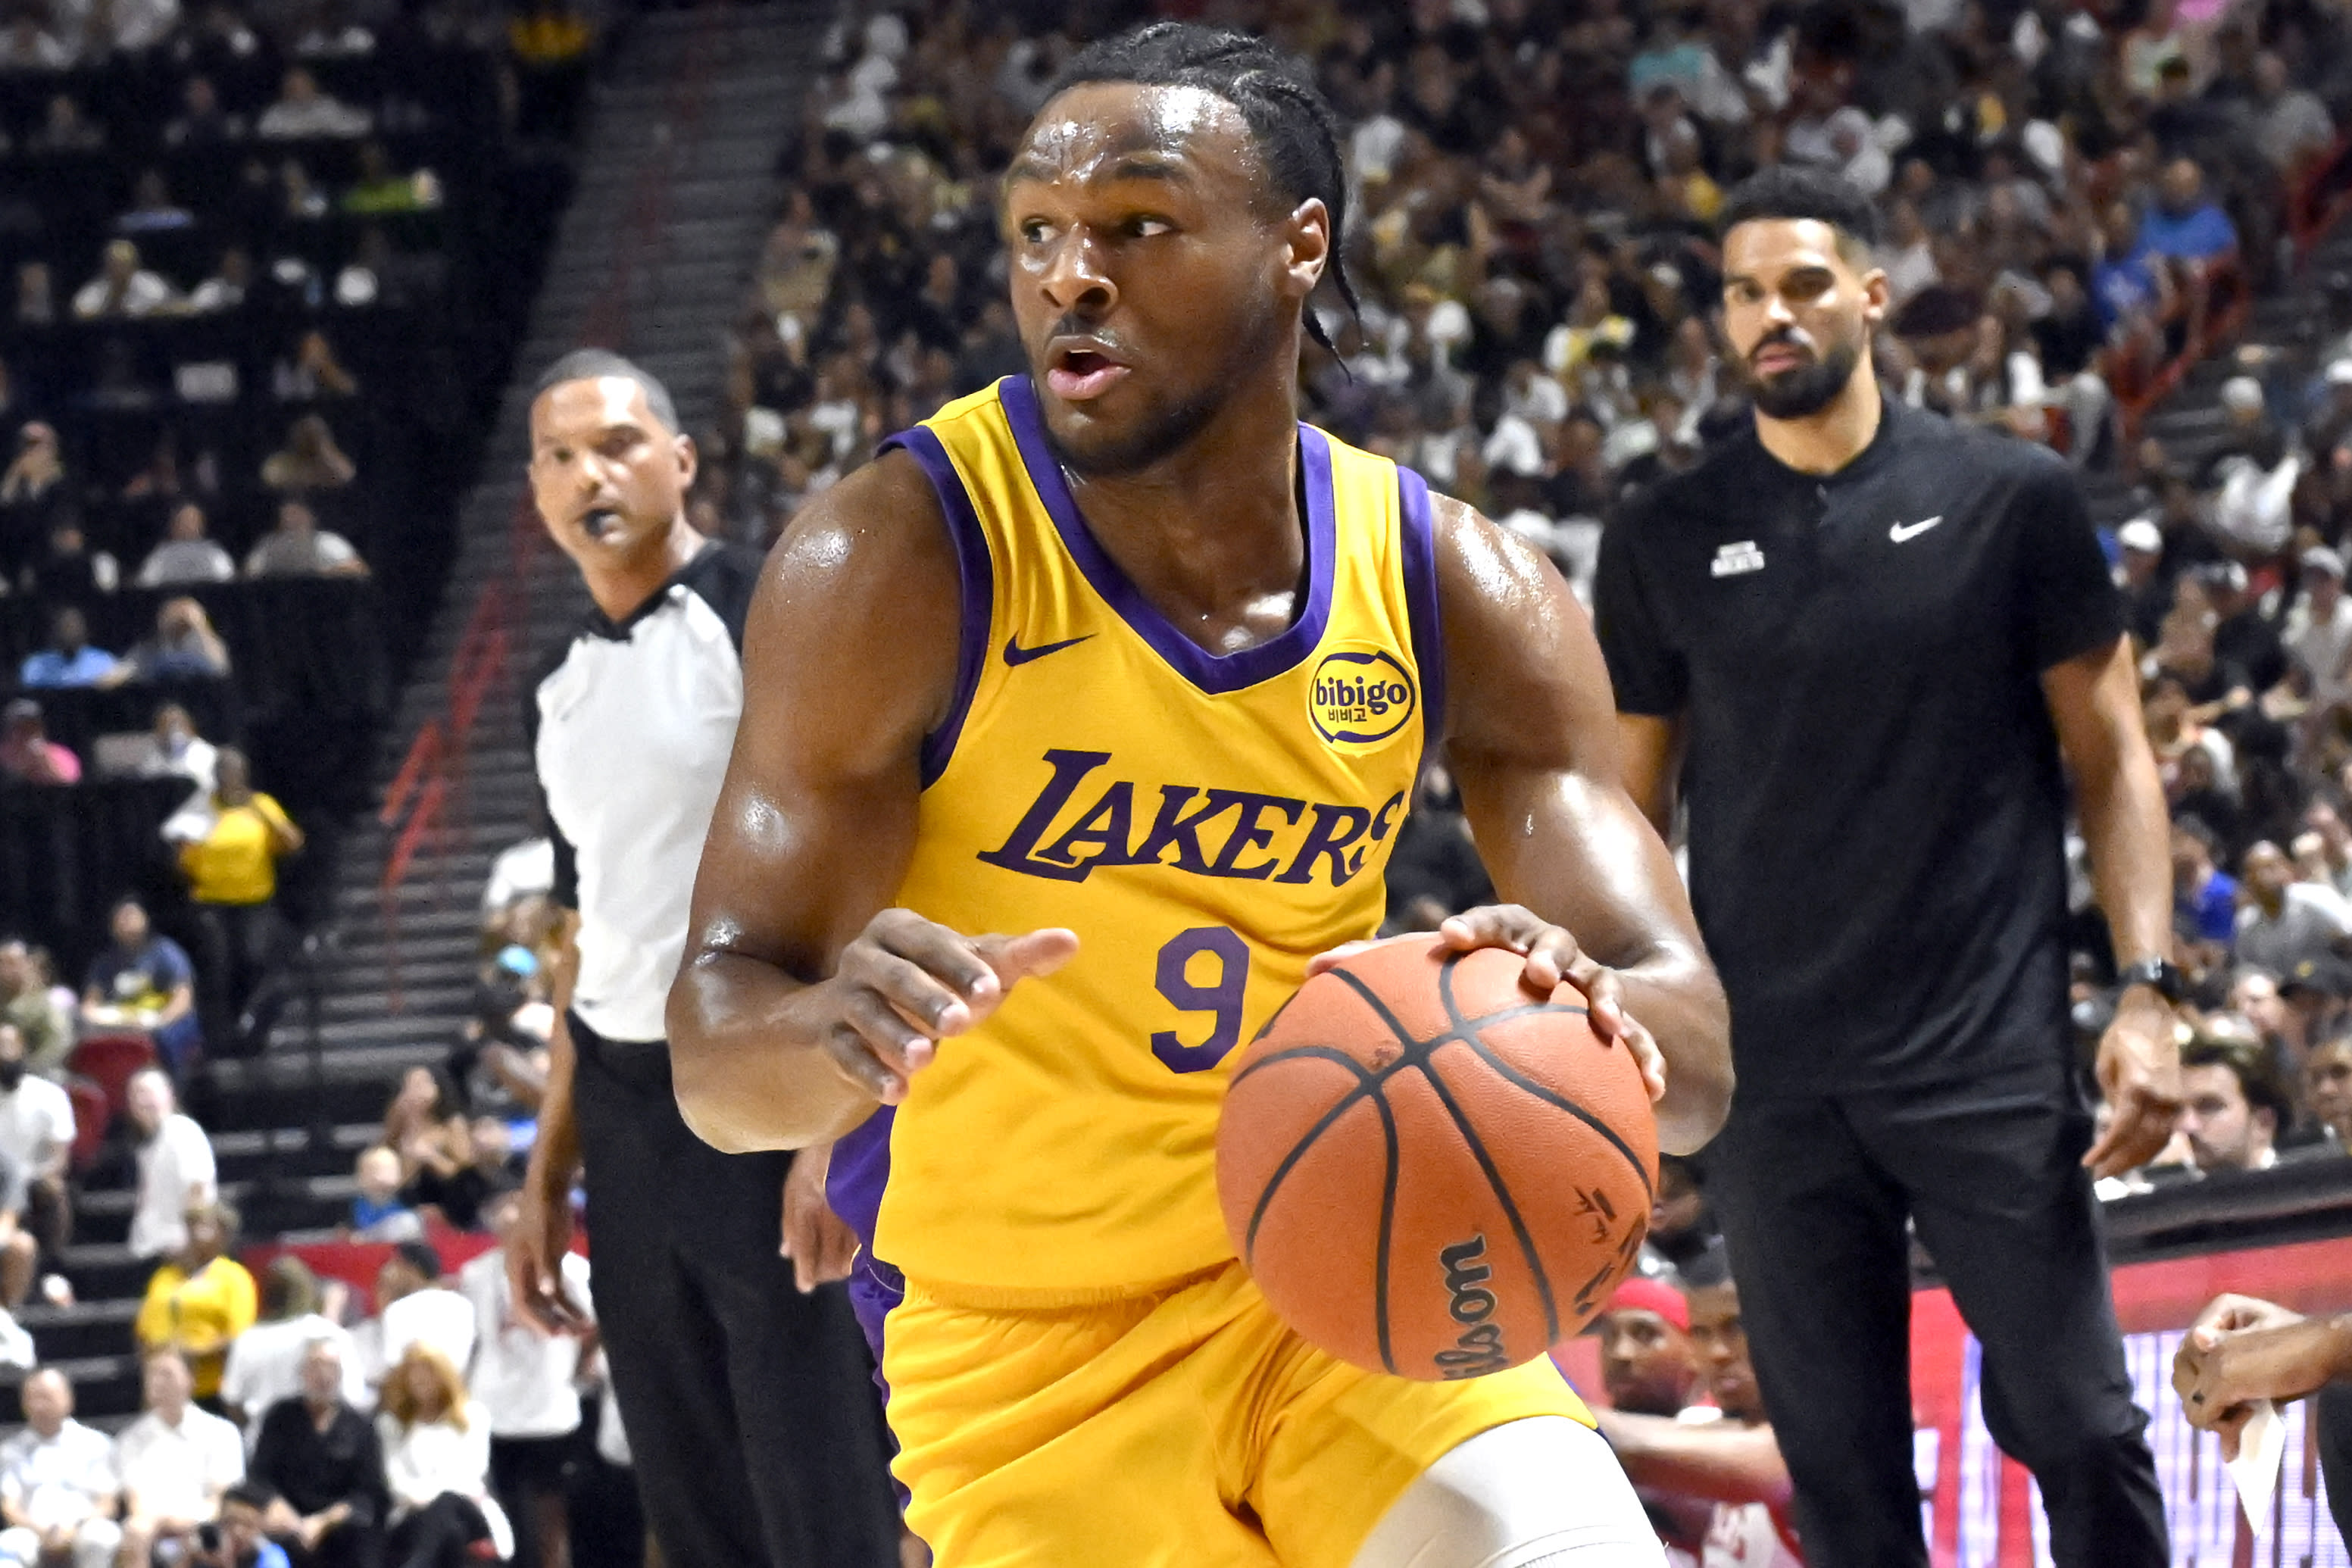 Bronny James scores 8 points for Lakers in Las Vegas NBA Summer League debut